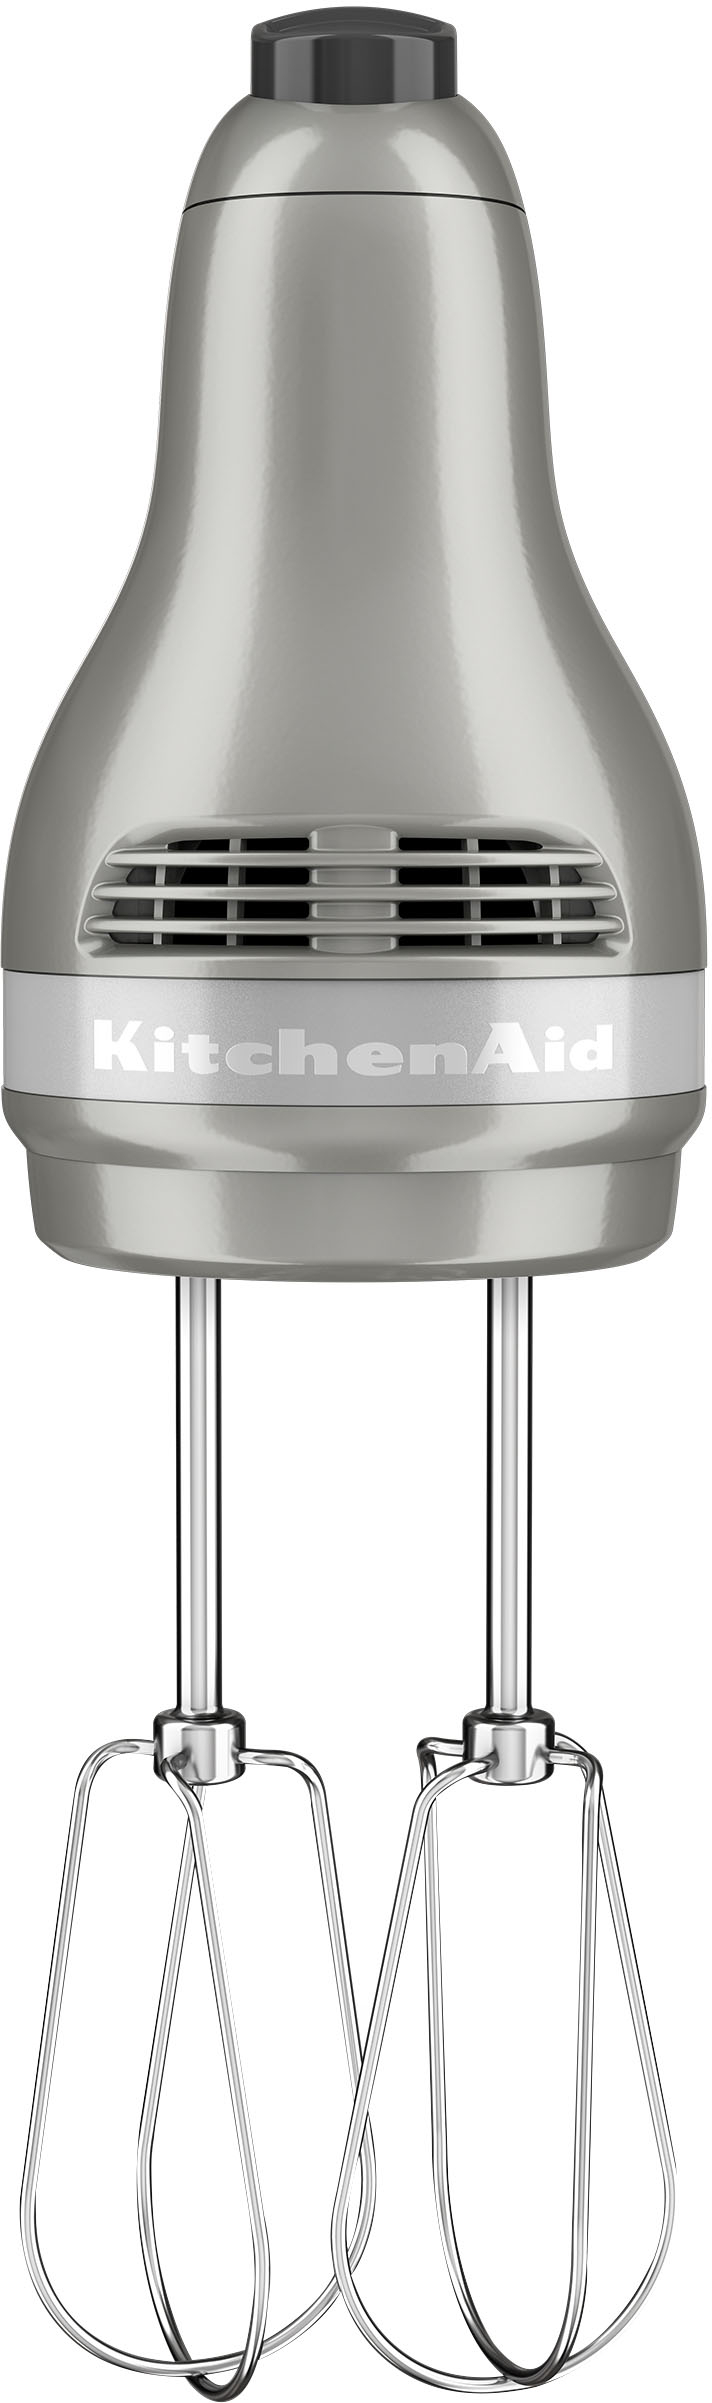 KitchenAid 5 Speed Ultra Power Hand Mixer